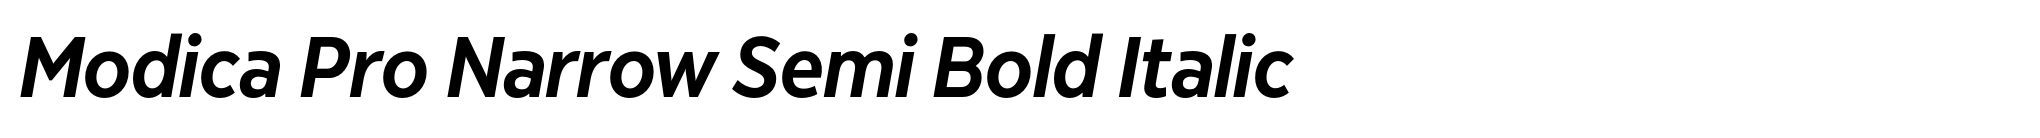 Modica Pro Narrow Semi Bold Italic image